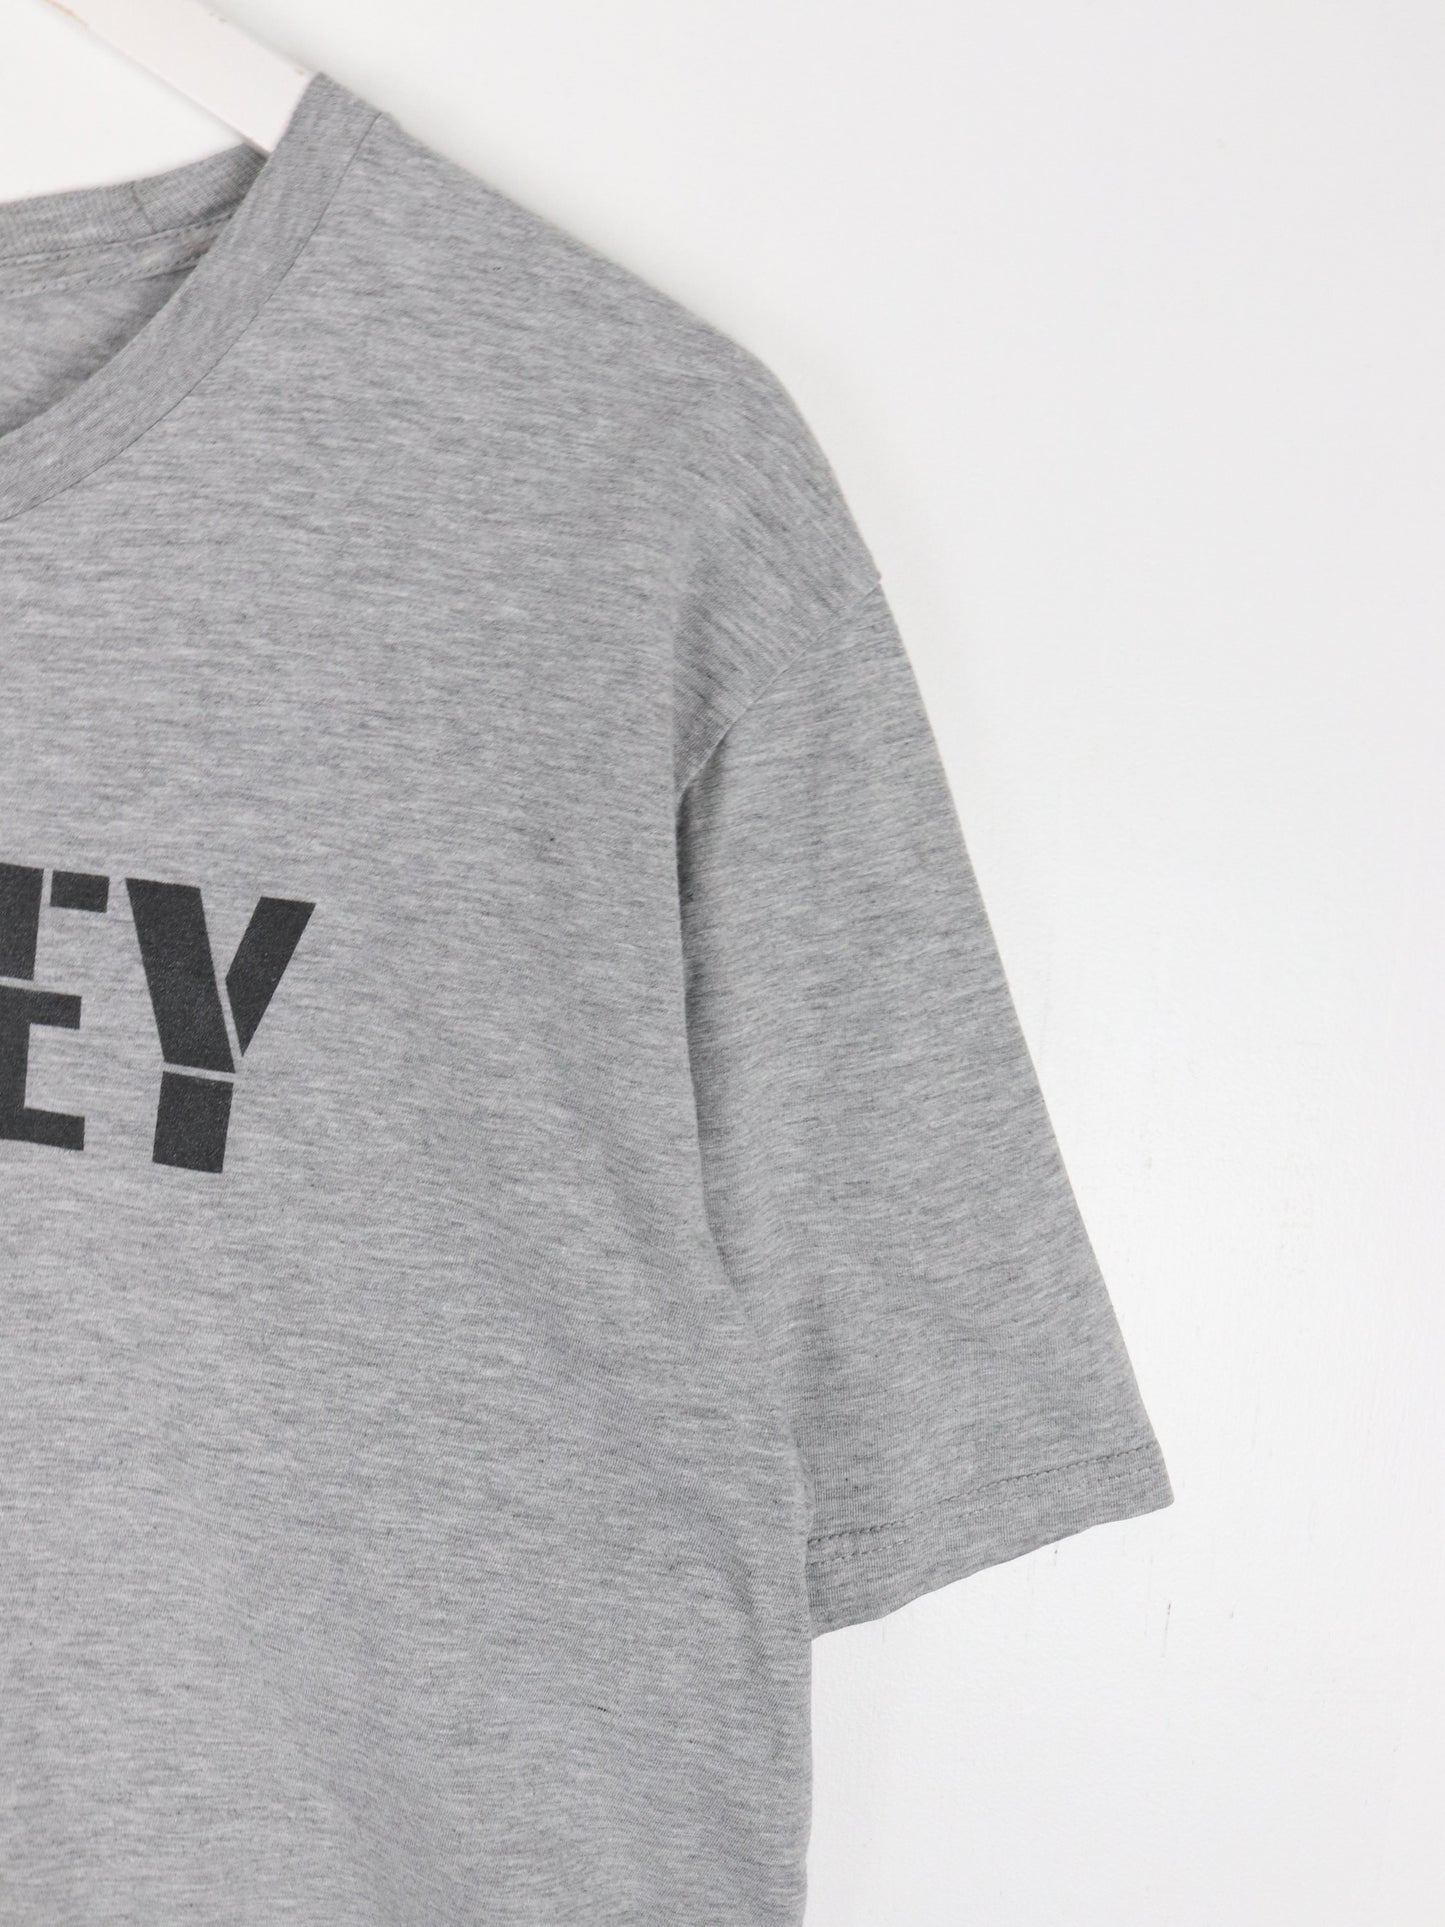 Oakley T Shirt Mens Large Grey Logo